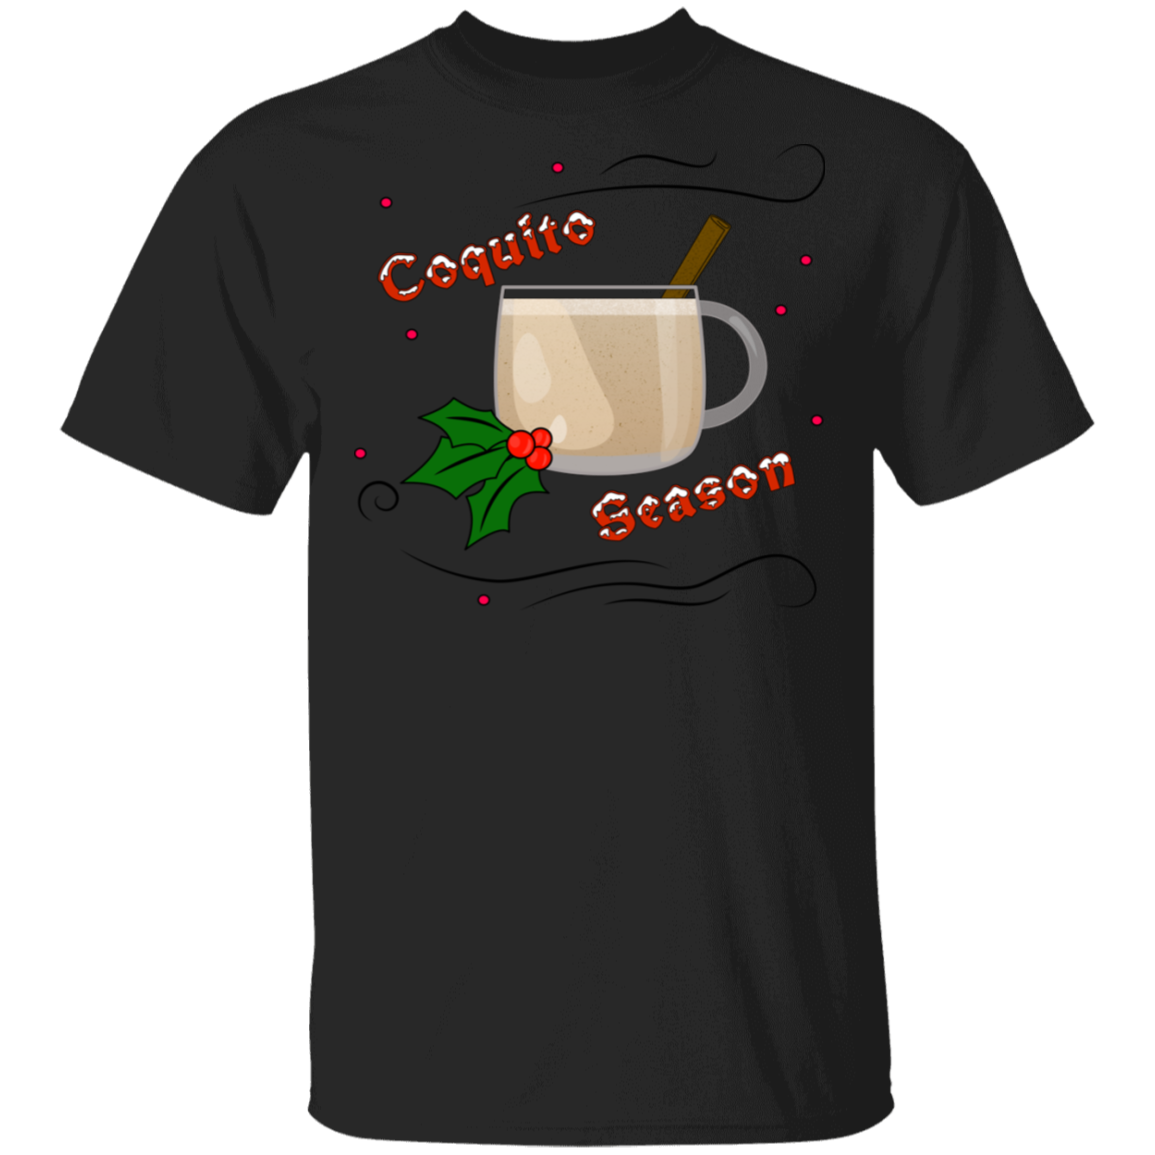 Coquito Season 5.3 oz. T-Shirt - Puerto Rican Pride